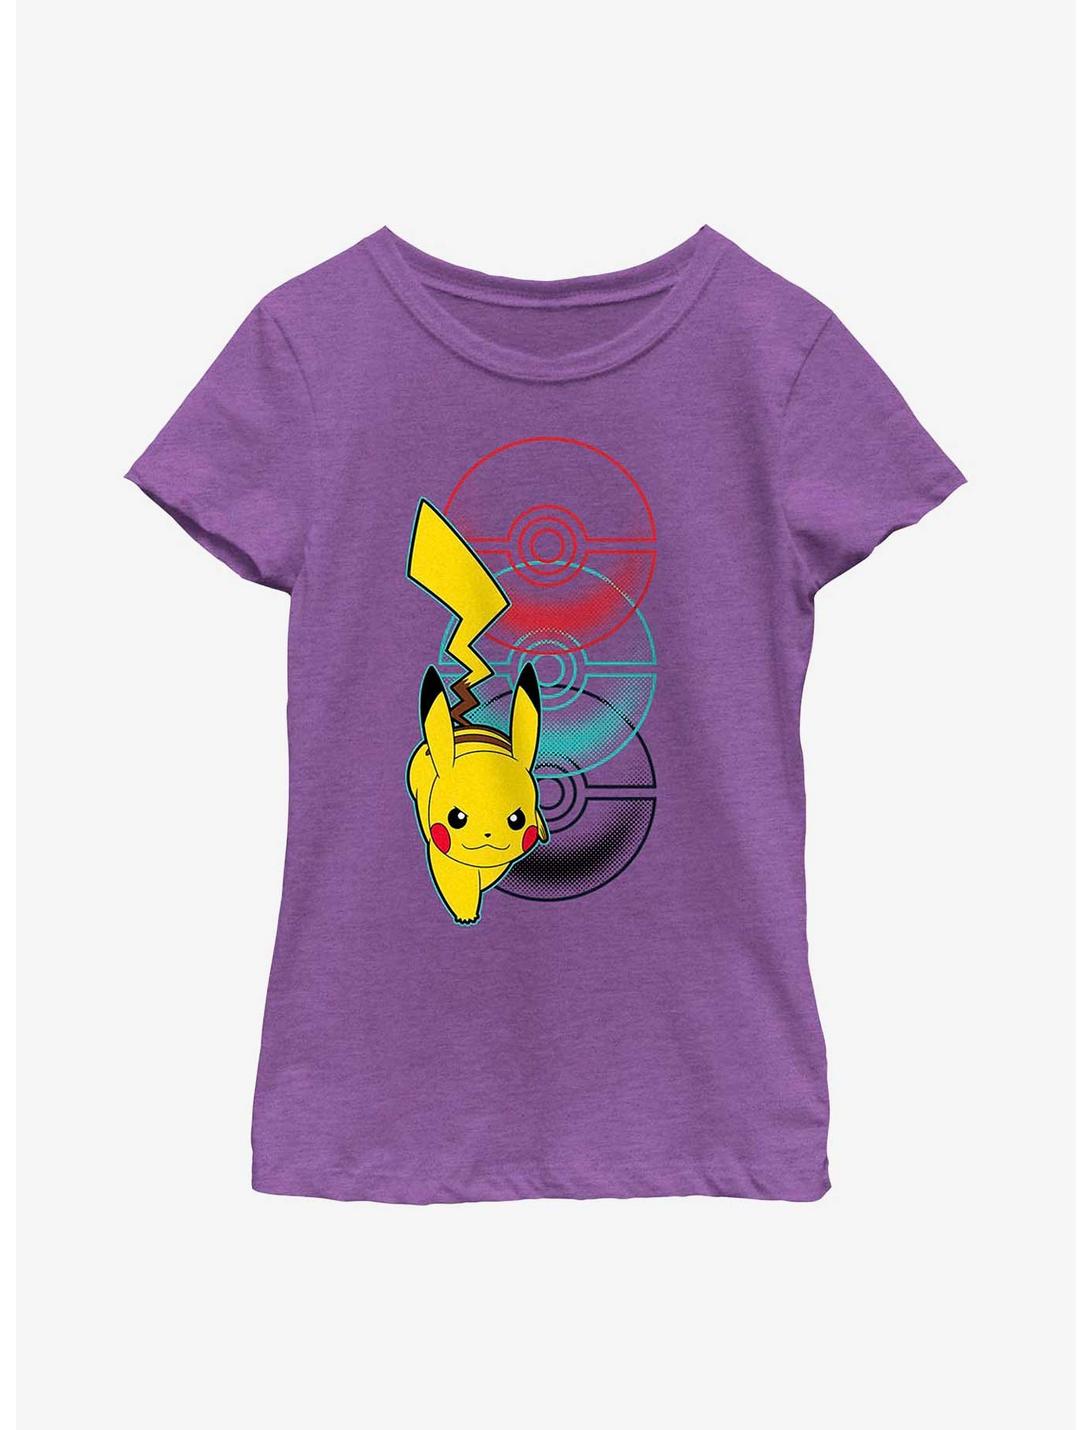 Pokemon Pikachu Quick Attack Youth Girls T-Shirt, PURPLE BERRY, hi-res